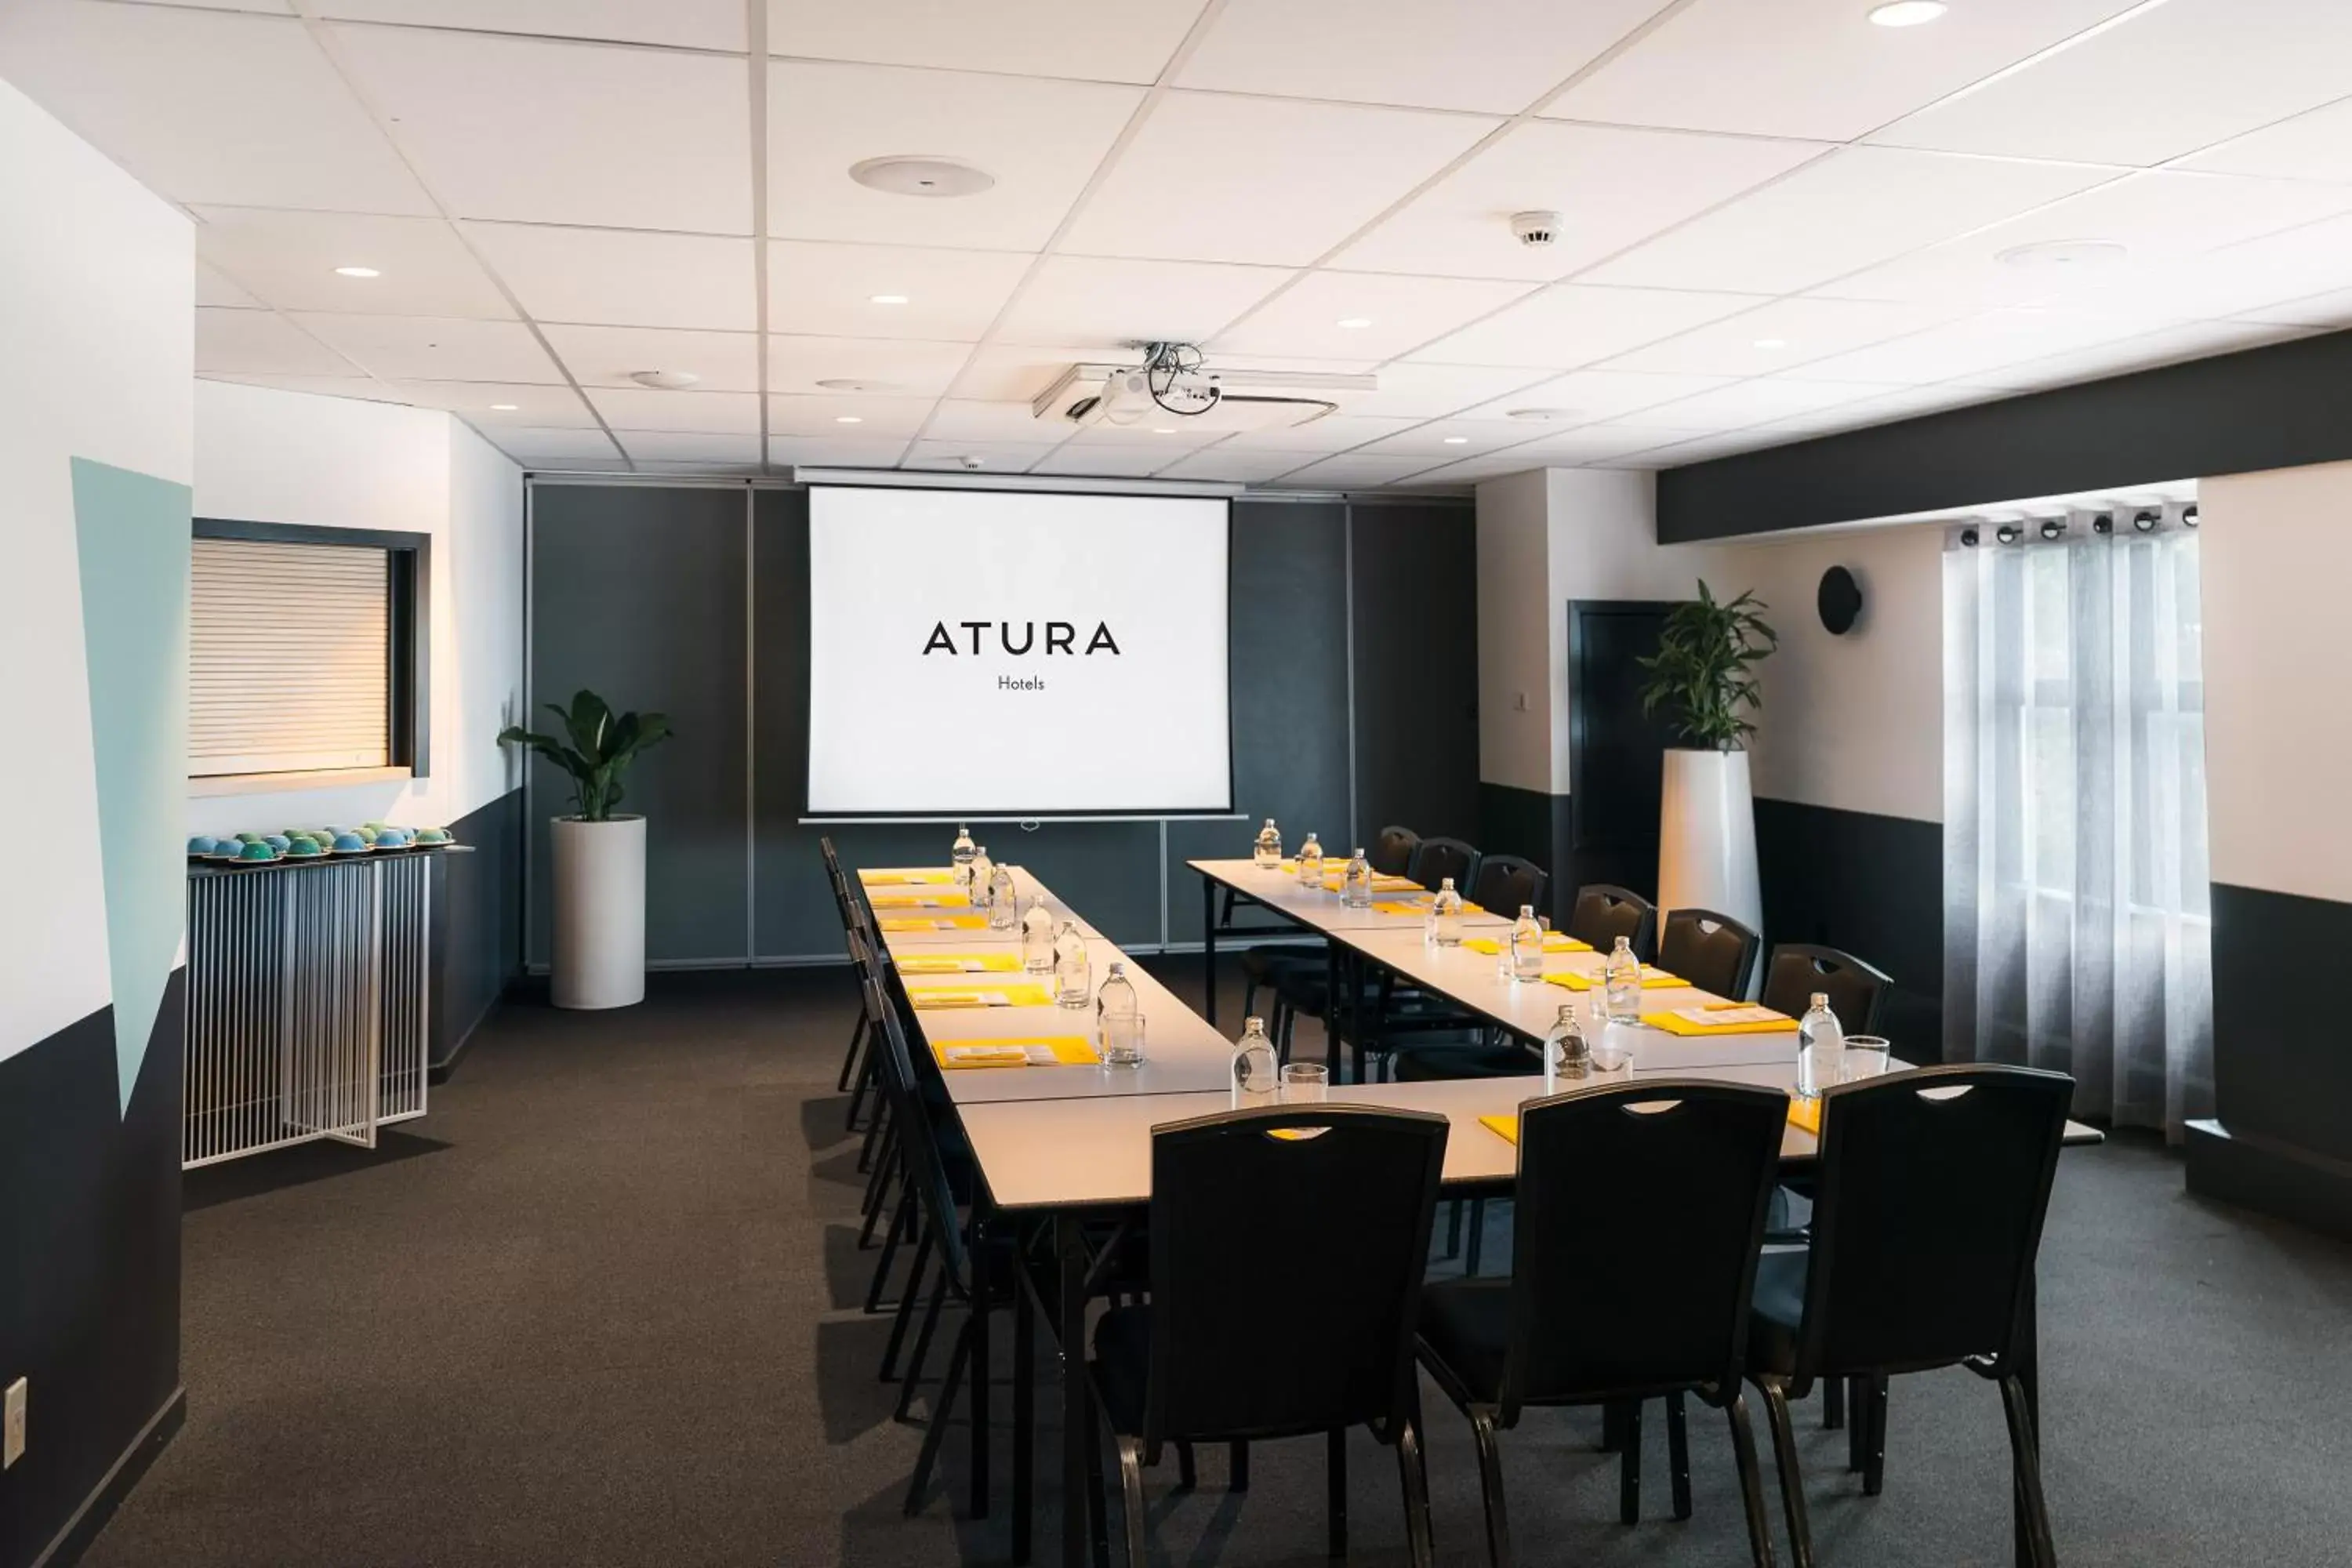 Business facilities in Atura Wellington